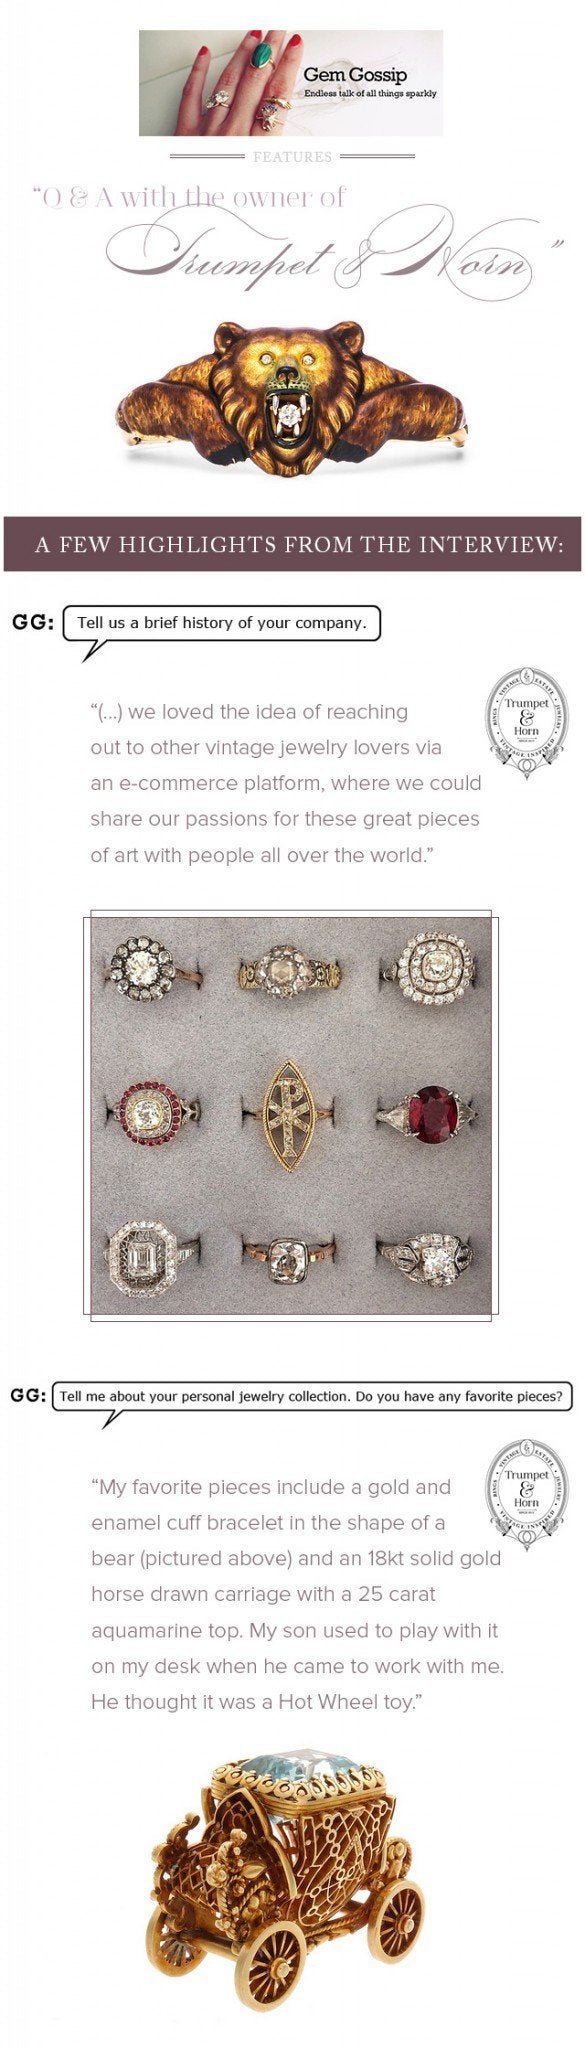 T&H Featured on Gem Gossip Jewelry Blog!